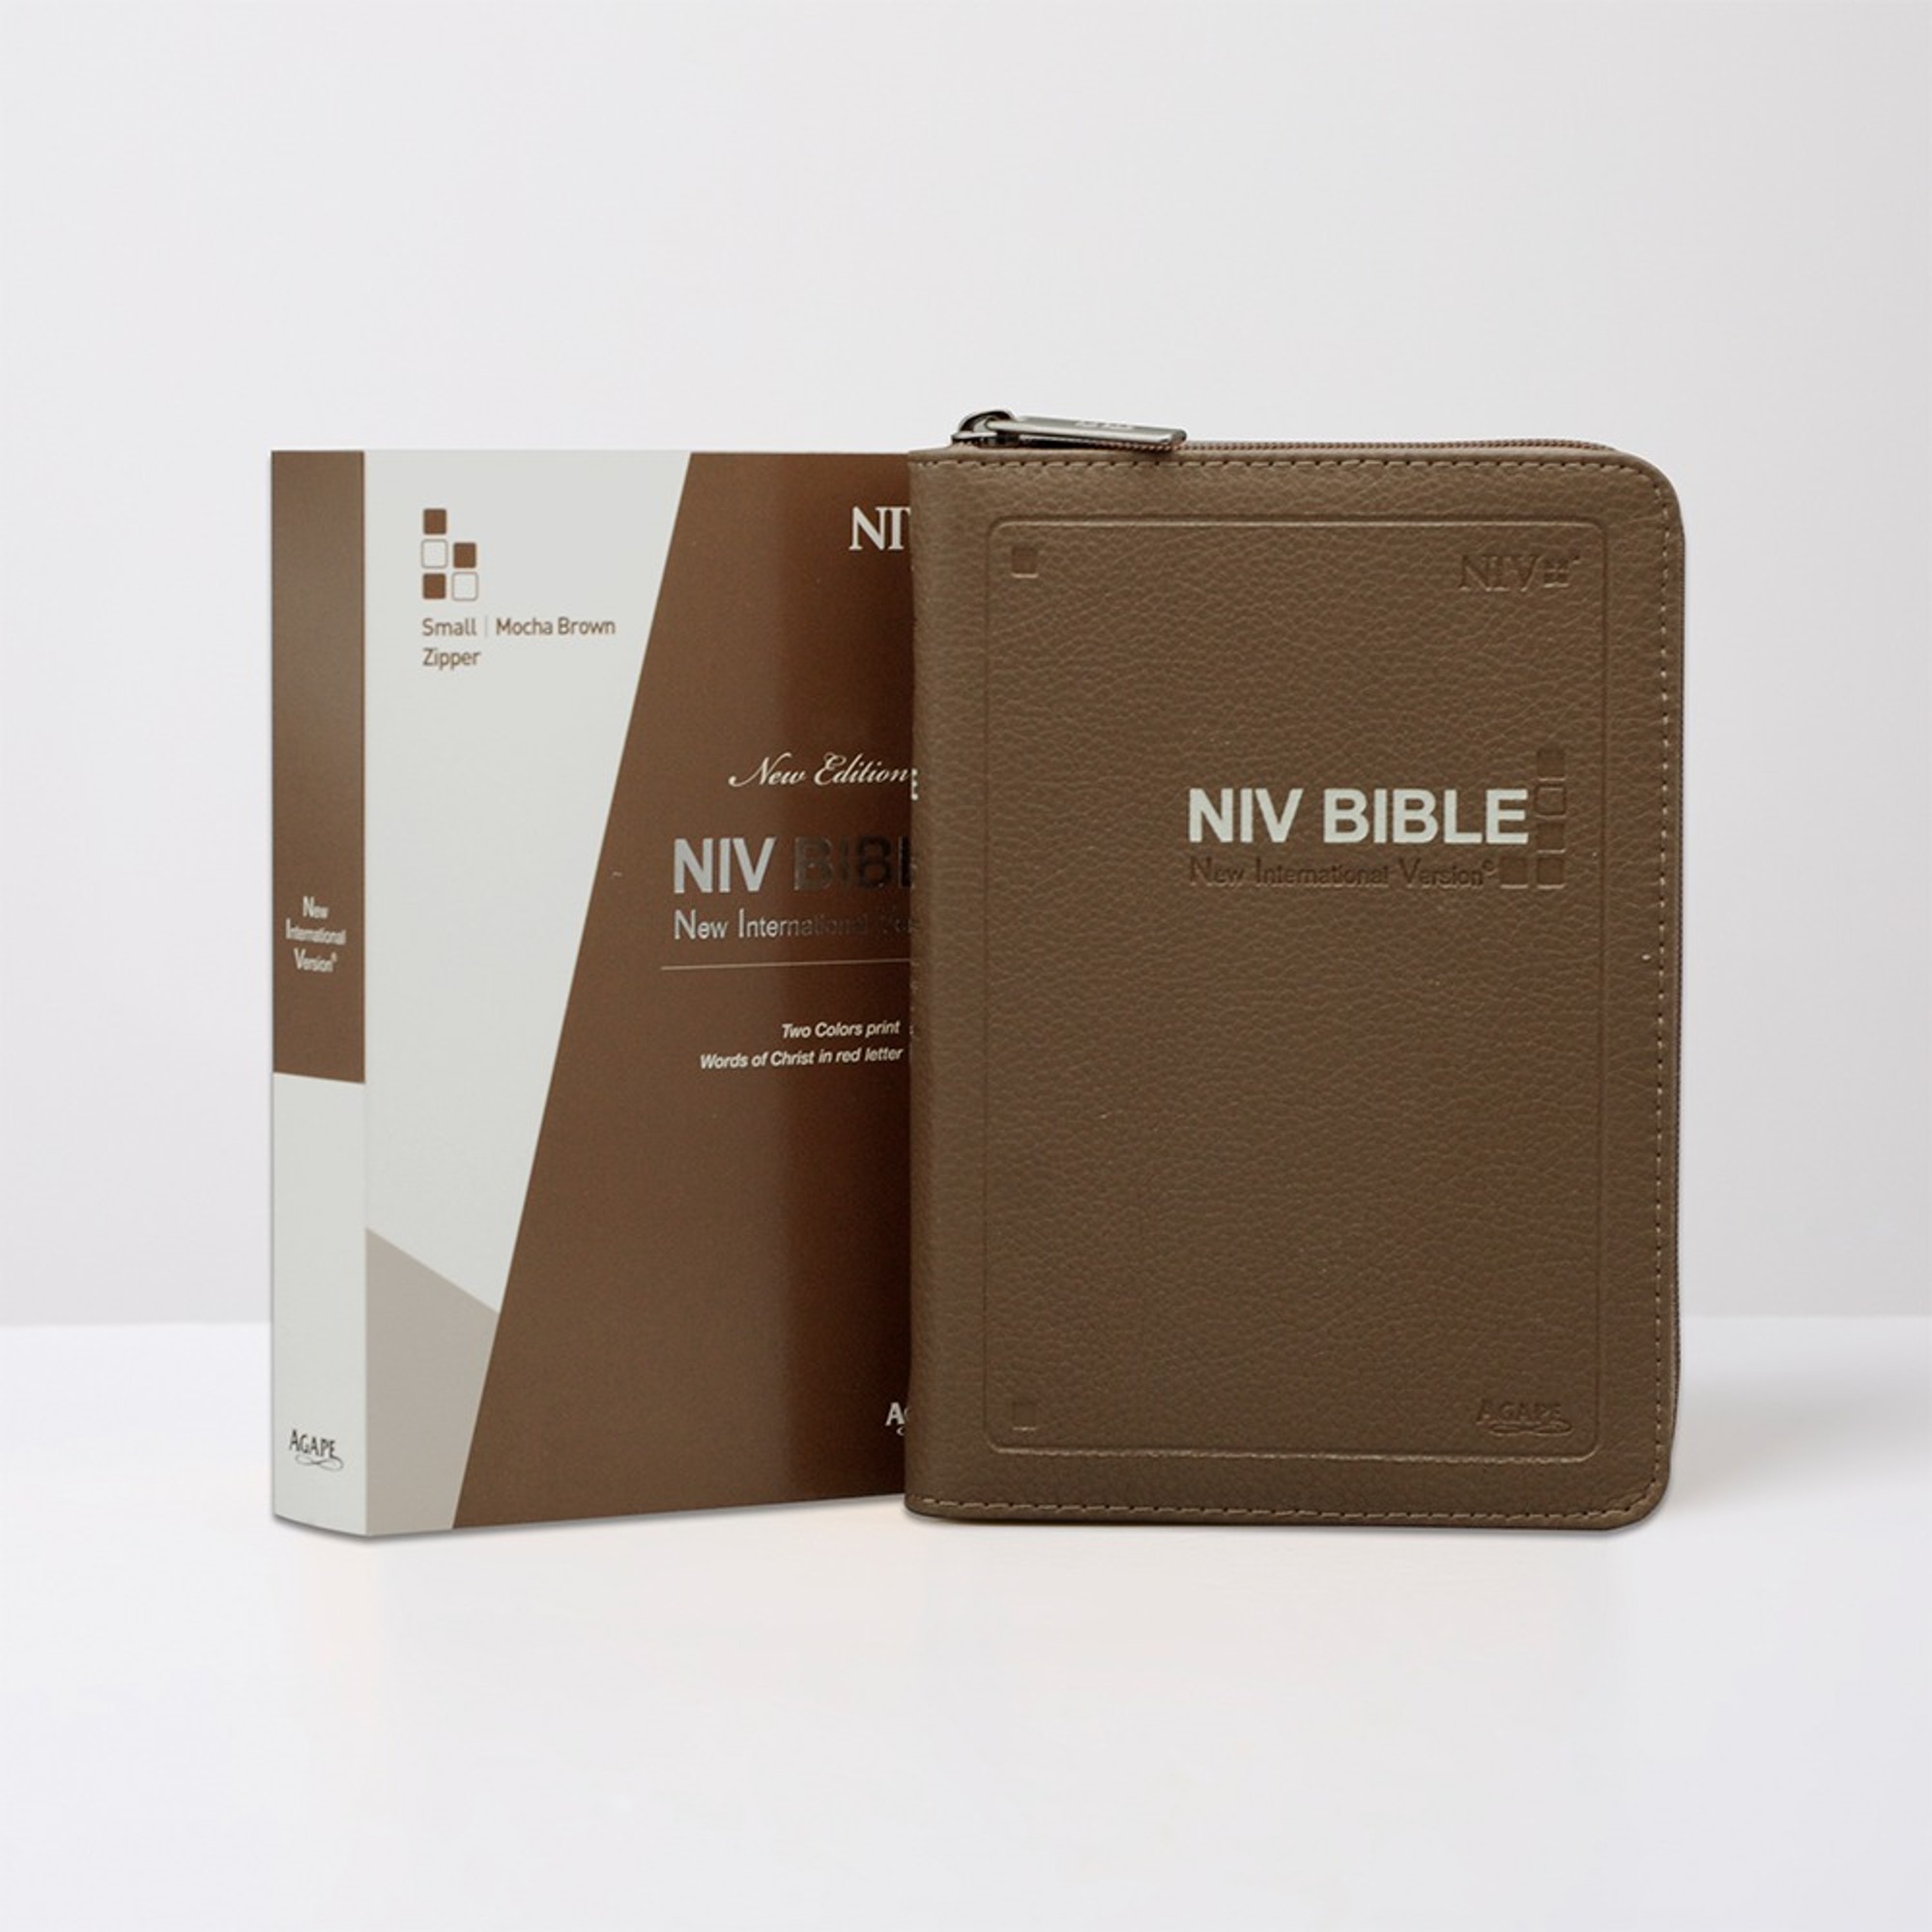 NIVBIBLE 영문성경/특소단본/지퍼/모카브라운